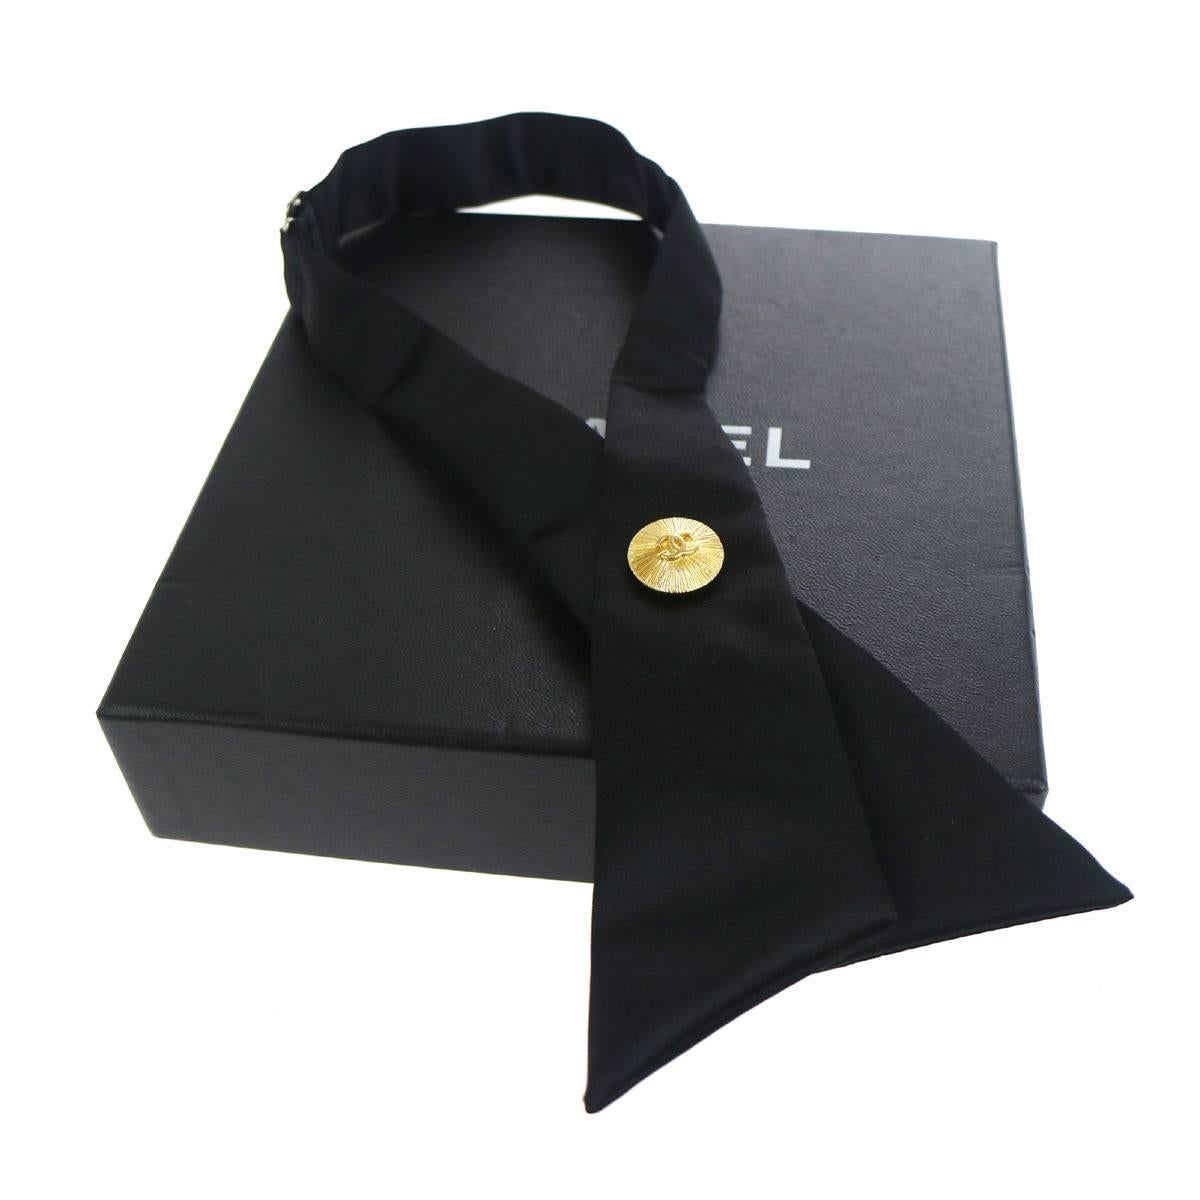 Beige Chanel Women's Black Gold Medallion Evening Pin Brooch Neck Tie in Box